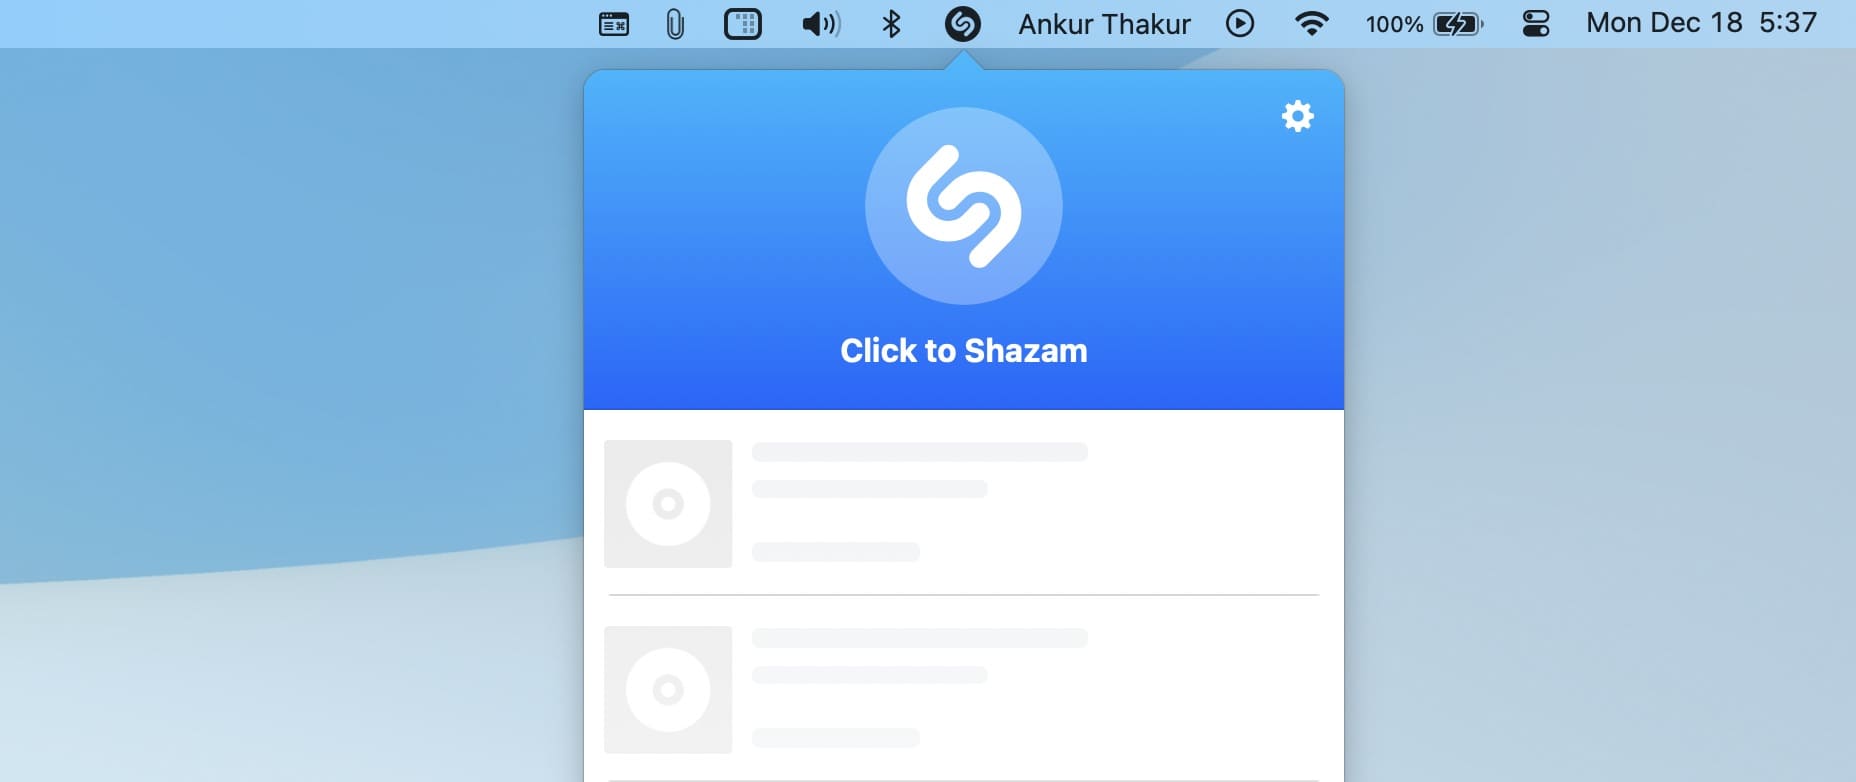 Click to Shazam in Mac menu bar